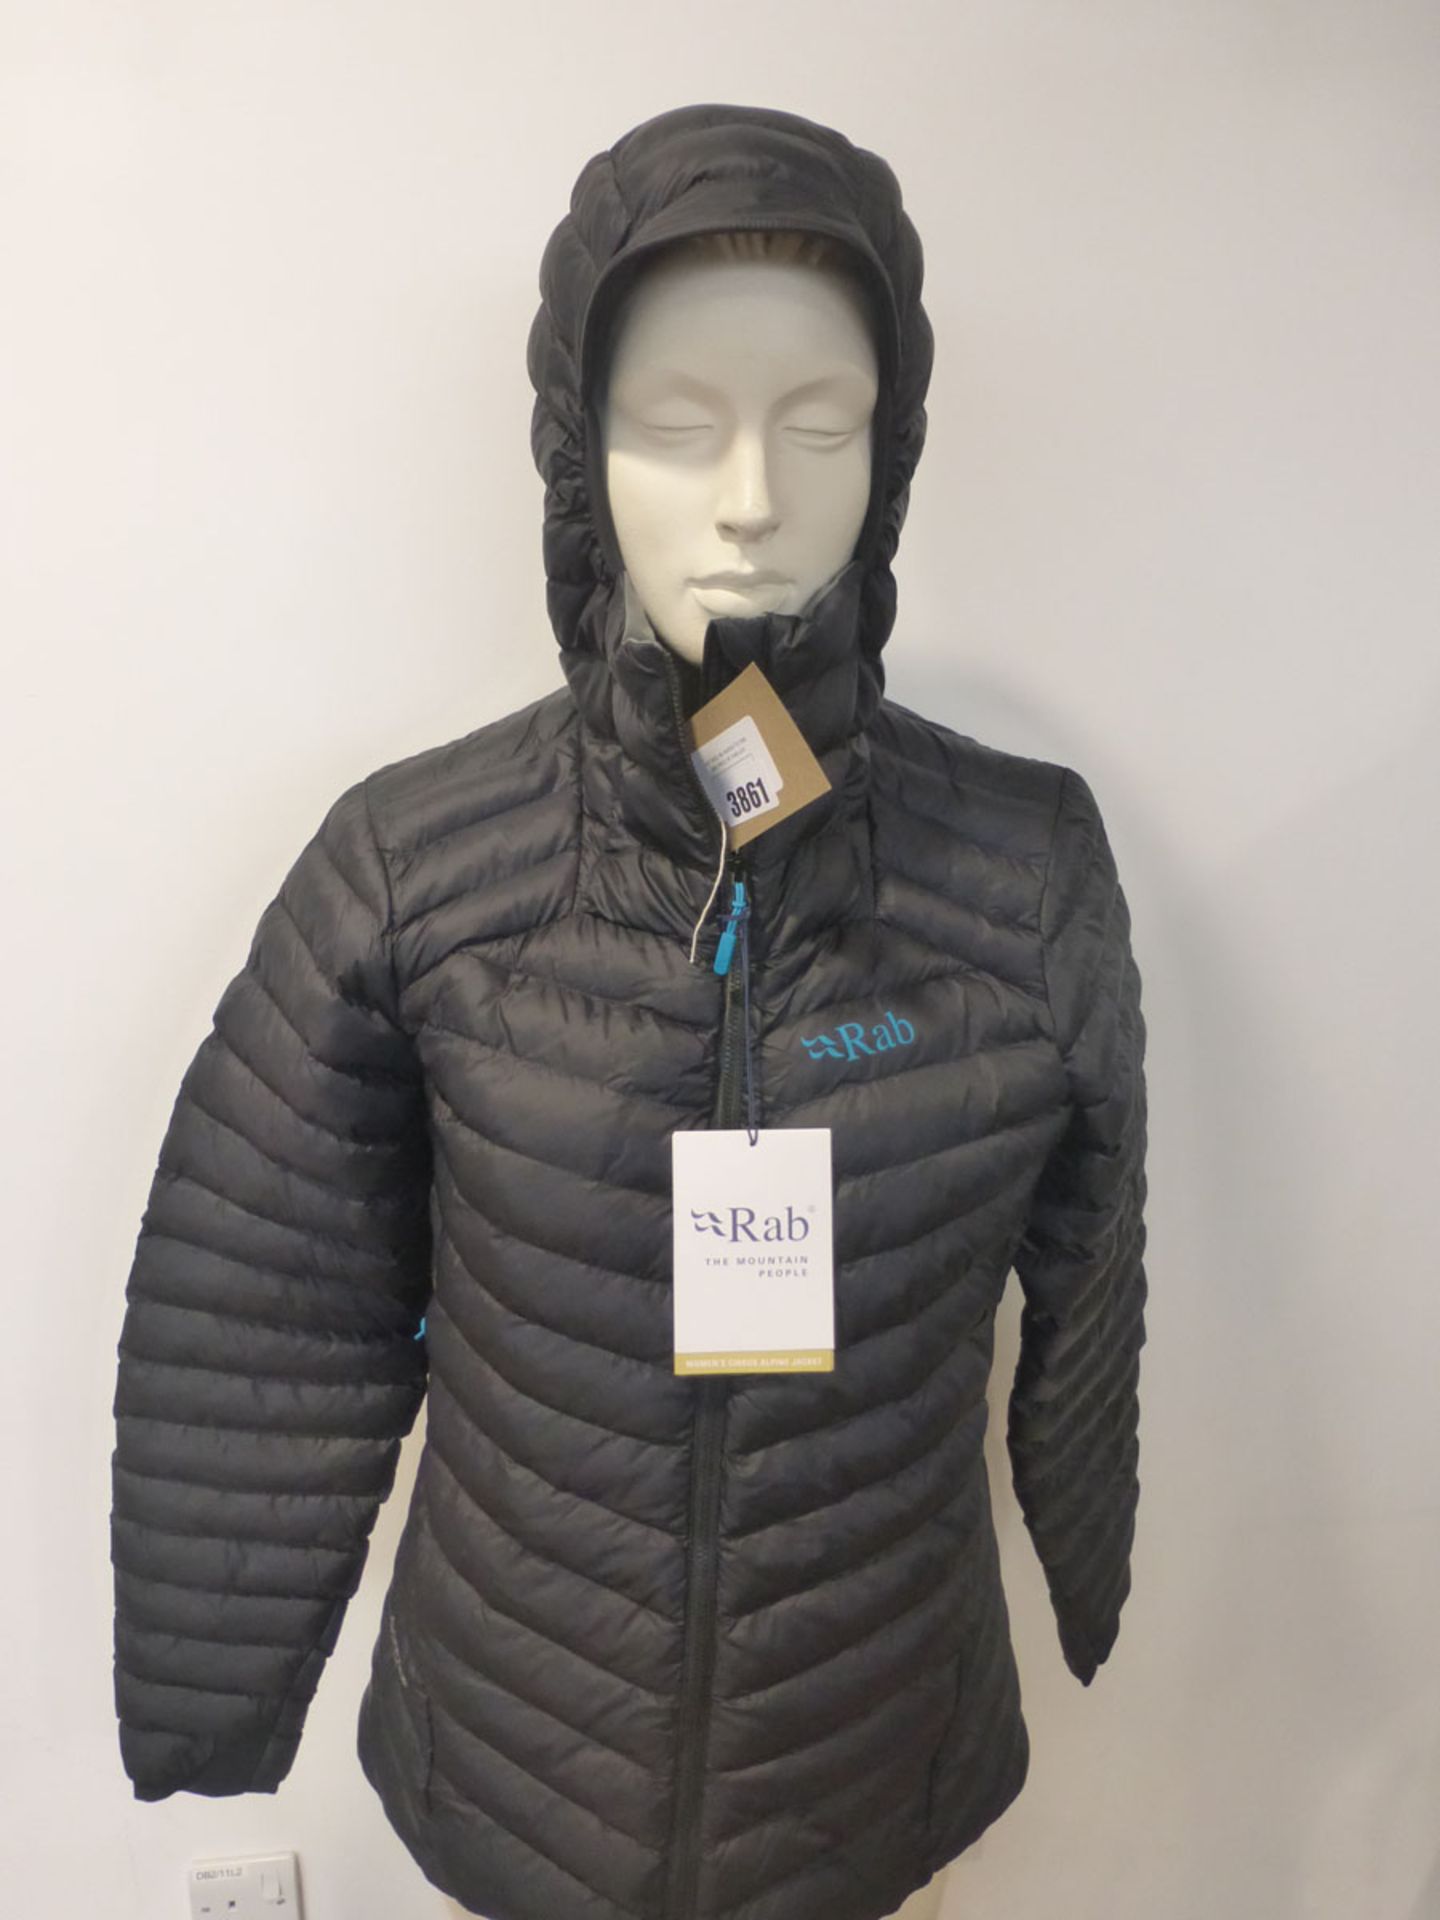 Rab The Mountain People women's cirrus alpine jacket size 10